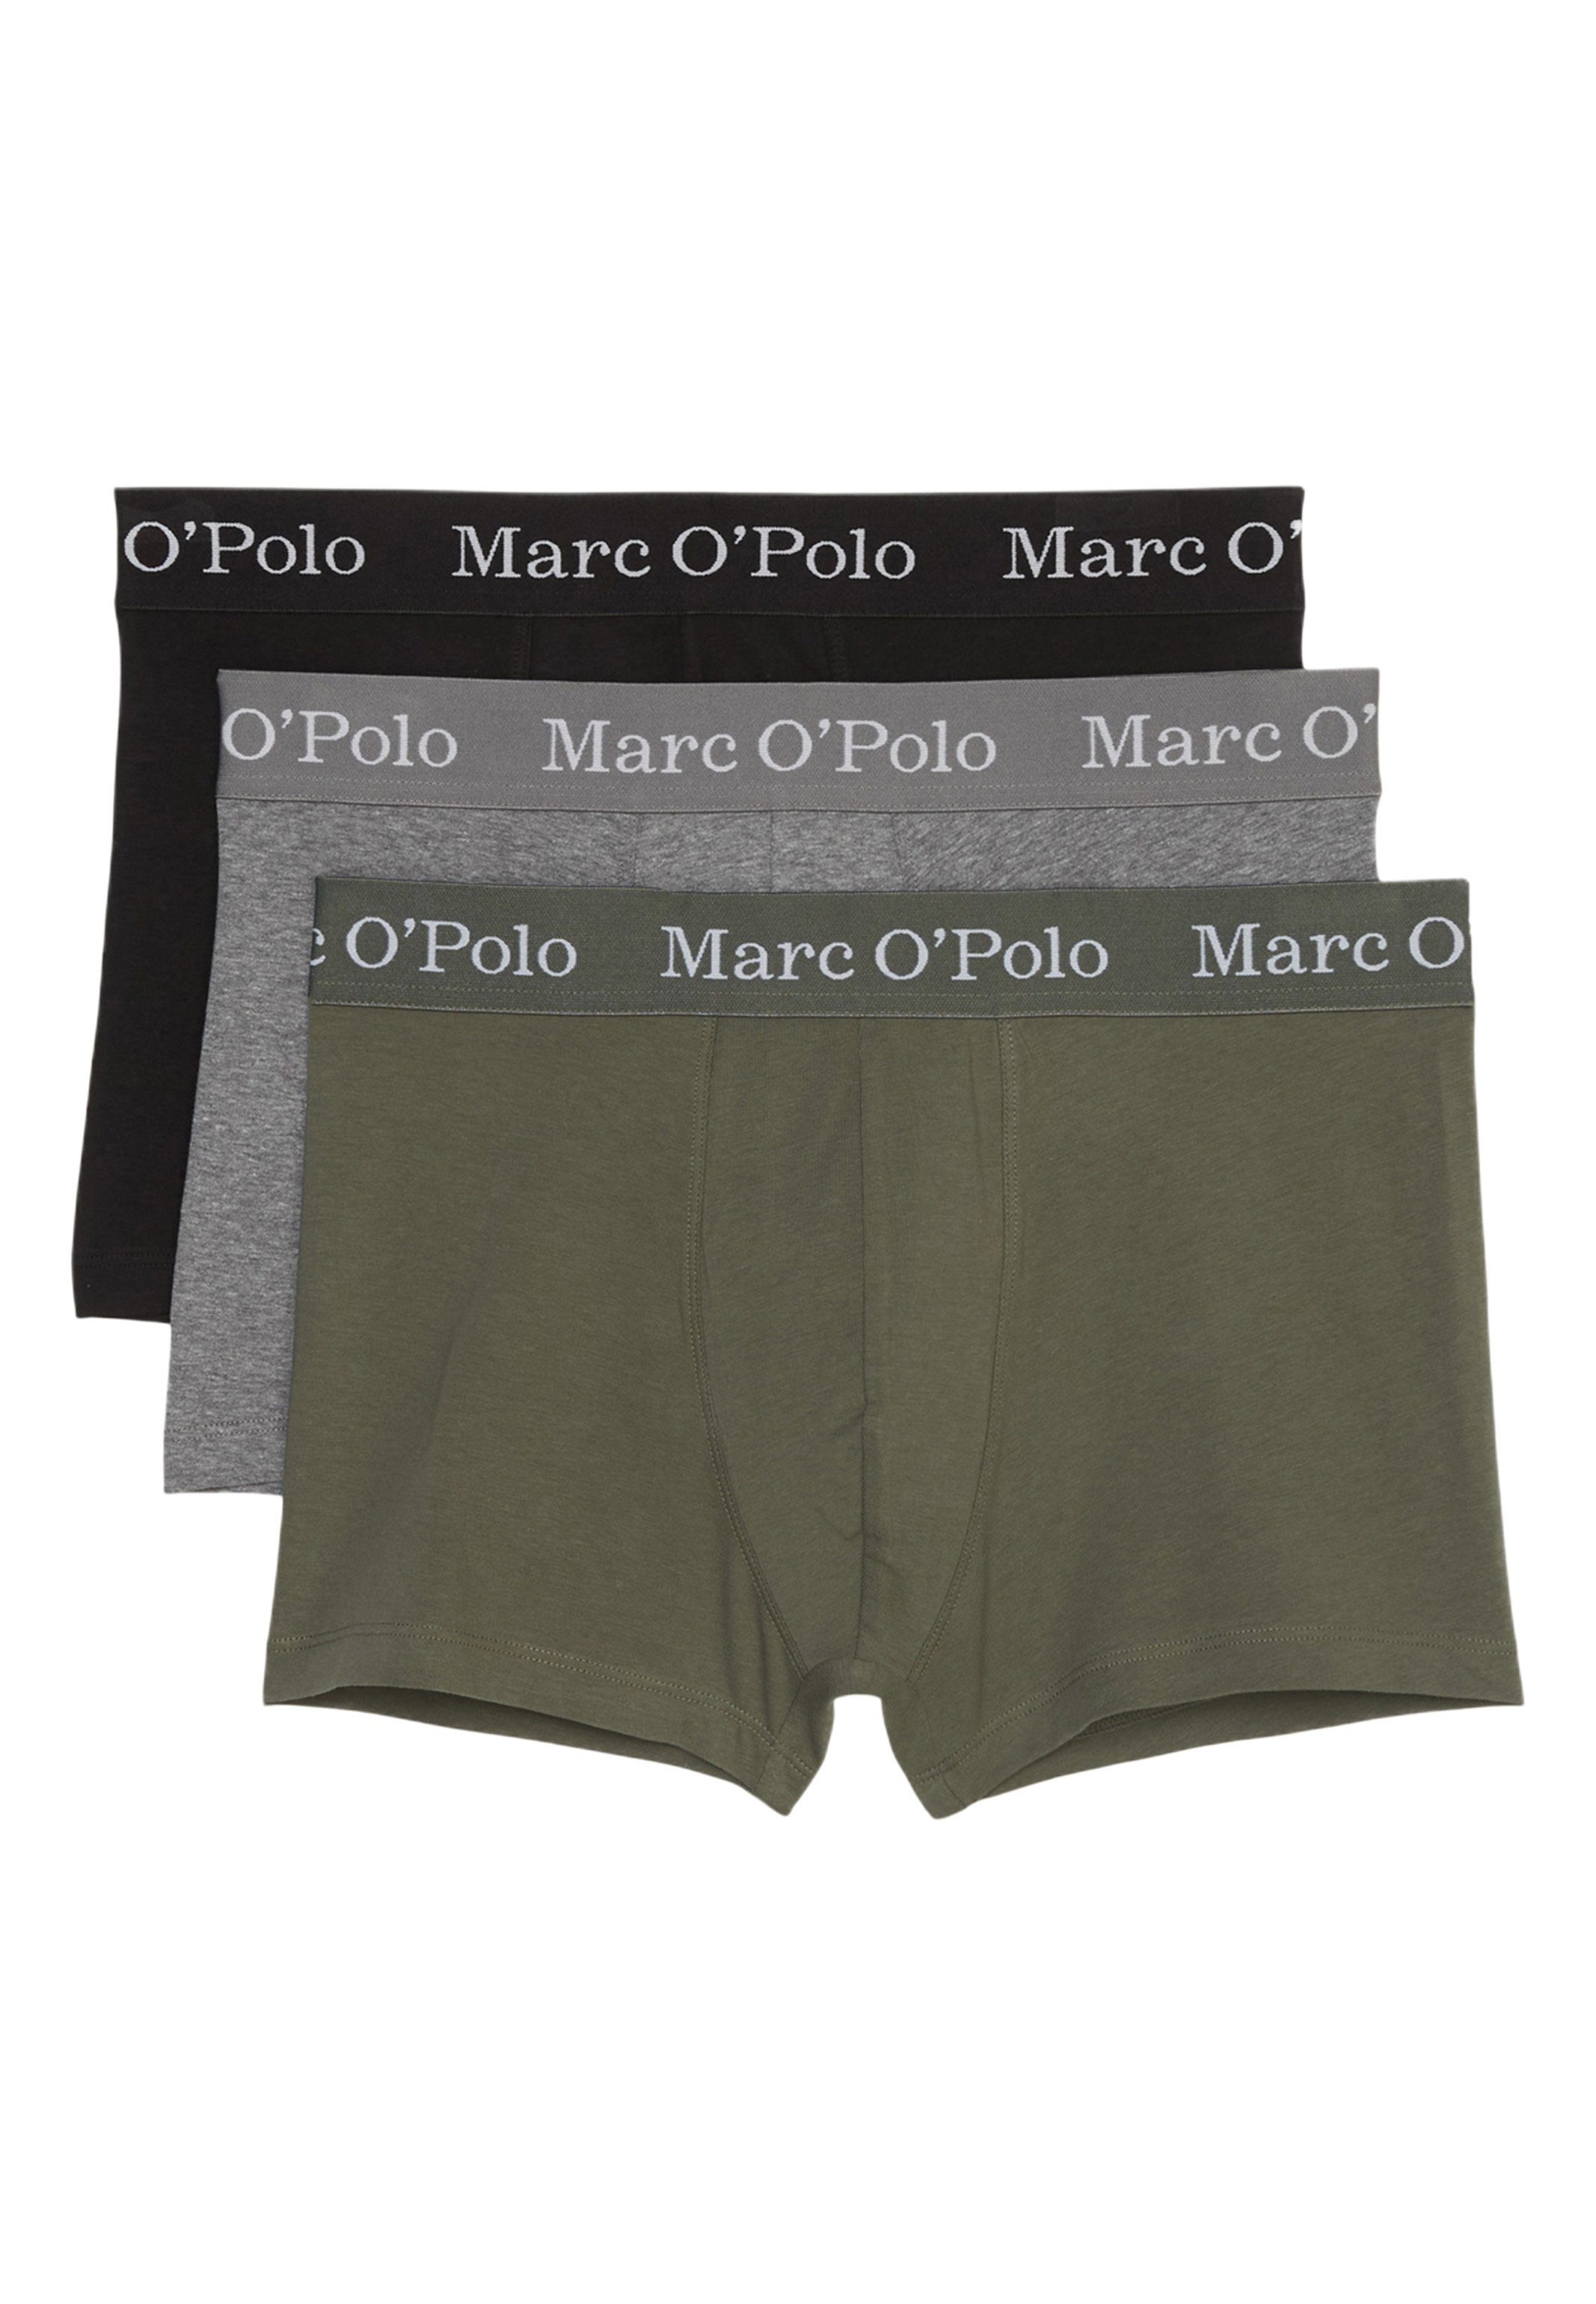 Melange/Black Marc / Ohne Eingriff Elements - Short Retro Organic O'Polo Pack - Cotton Baumwolle Pant - Boxer 3-St) Retro (Spar-Set, Beetle/Grey 3er